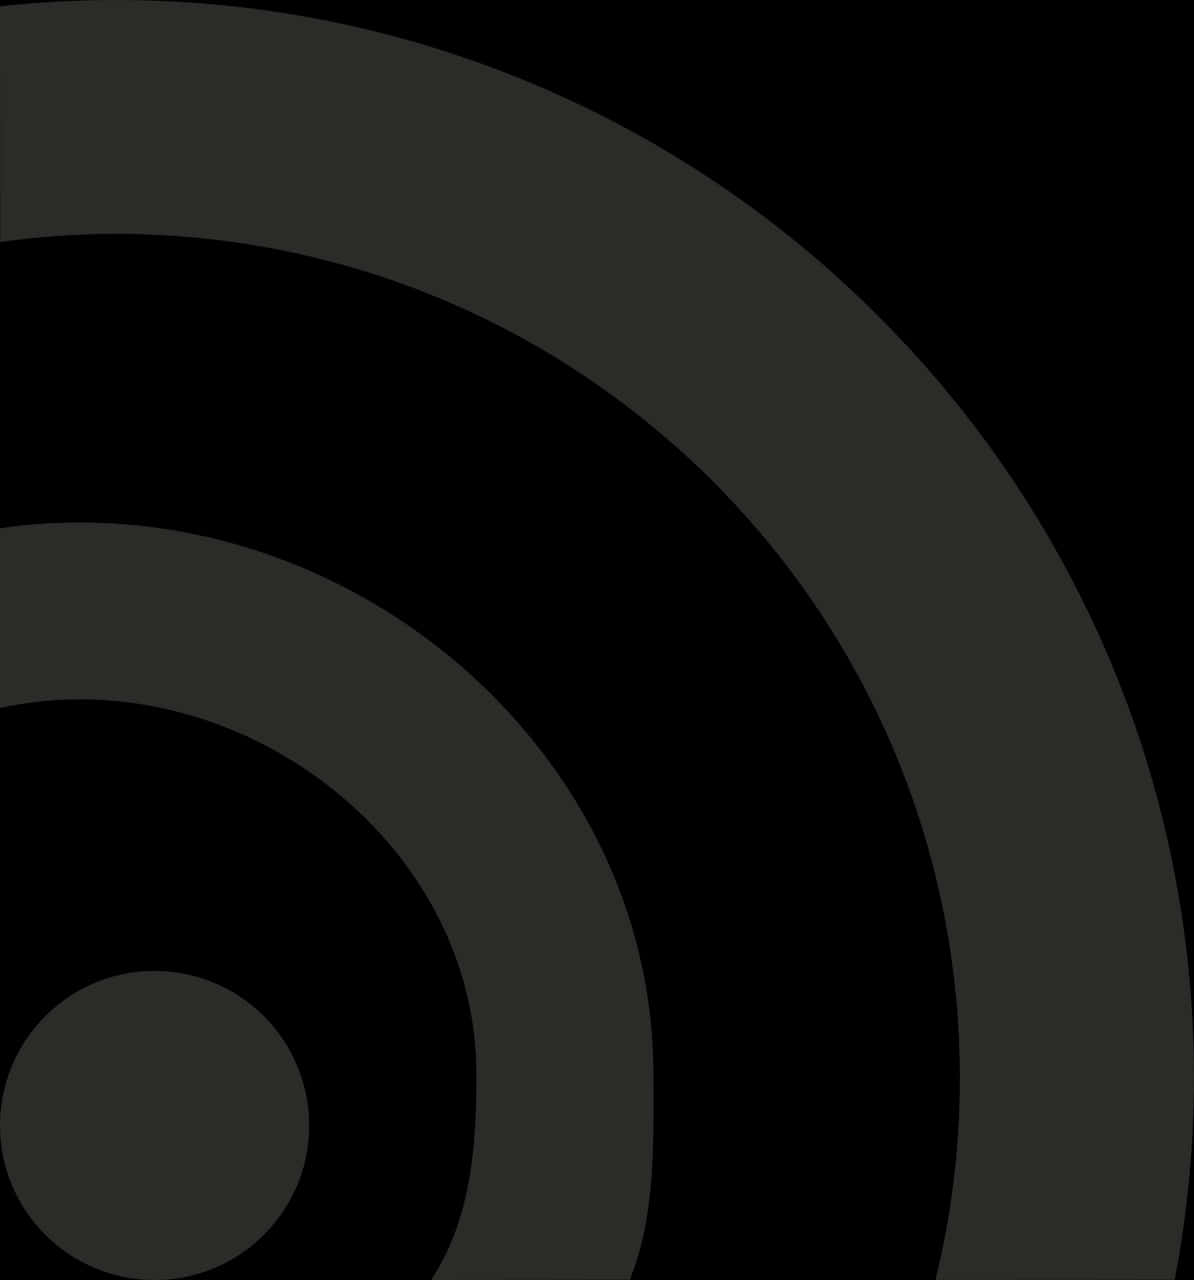 Abstract Black Circle Vector Design PNG image